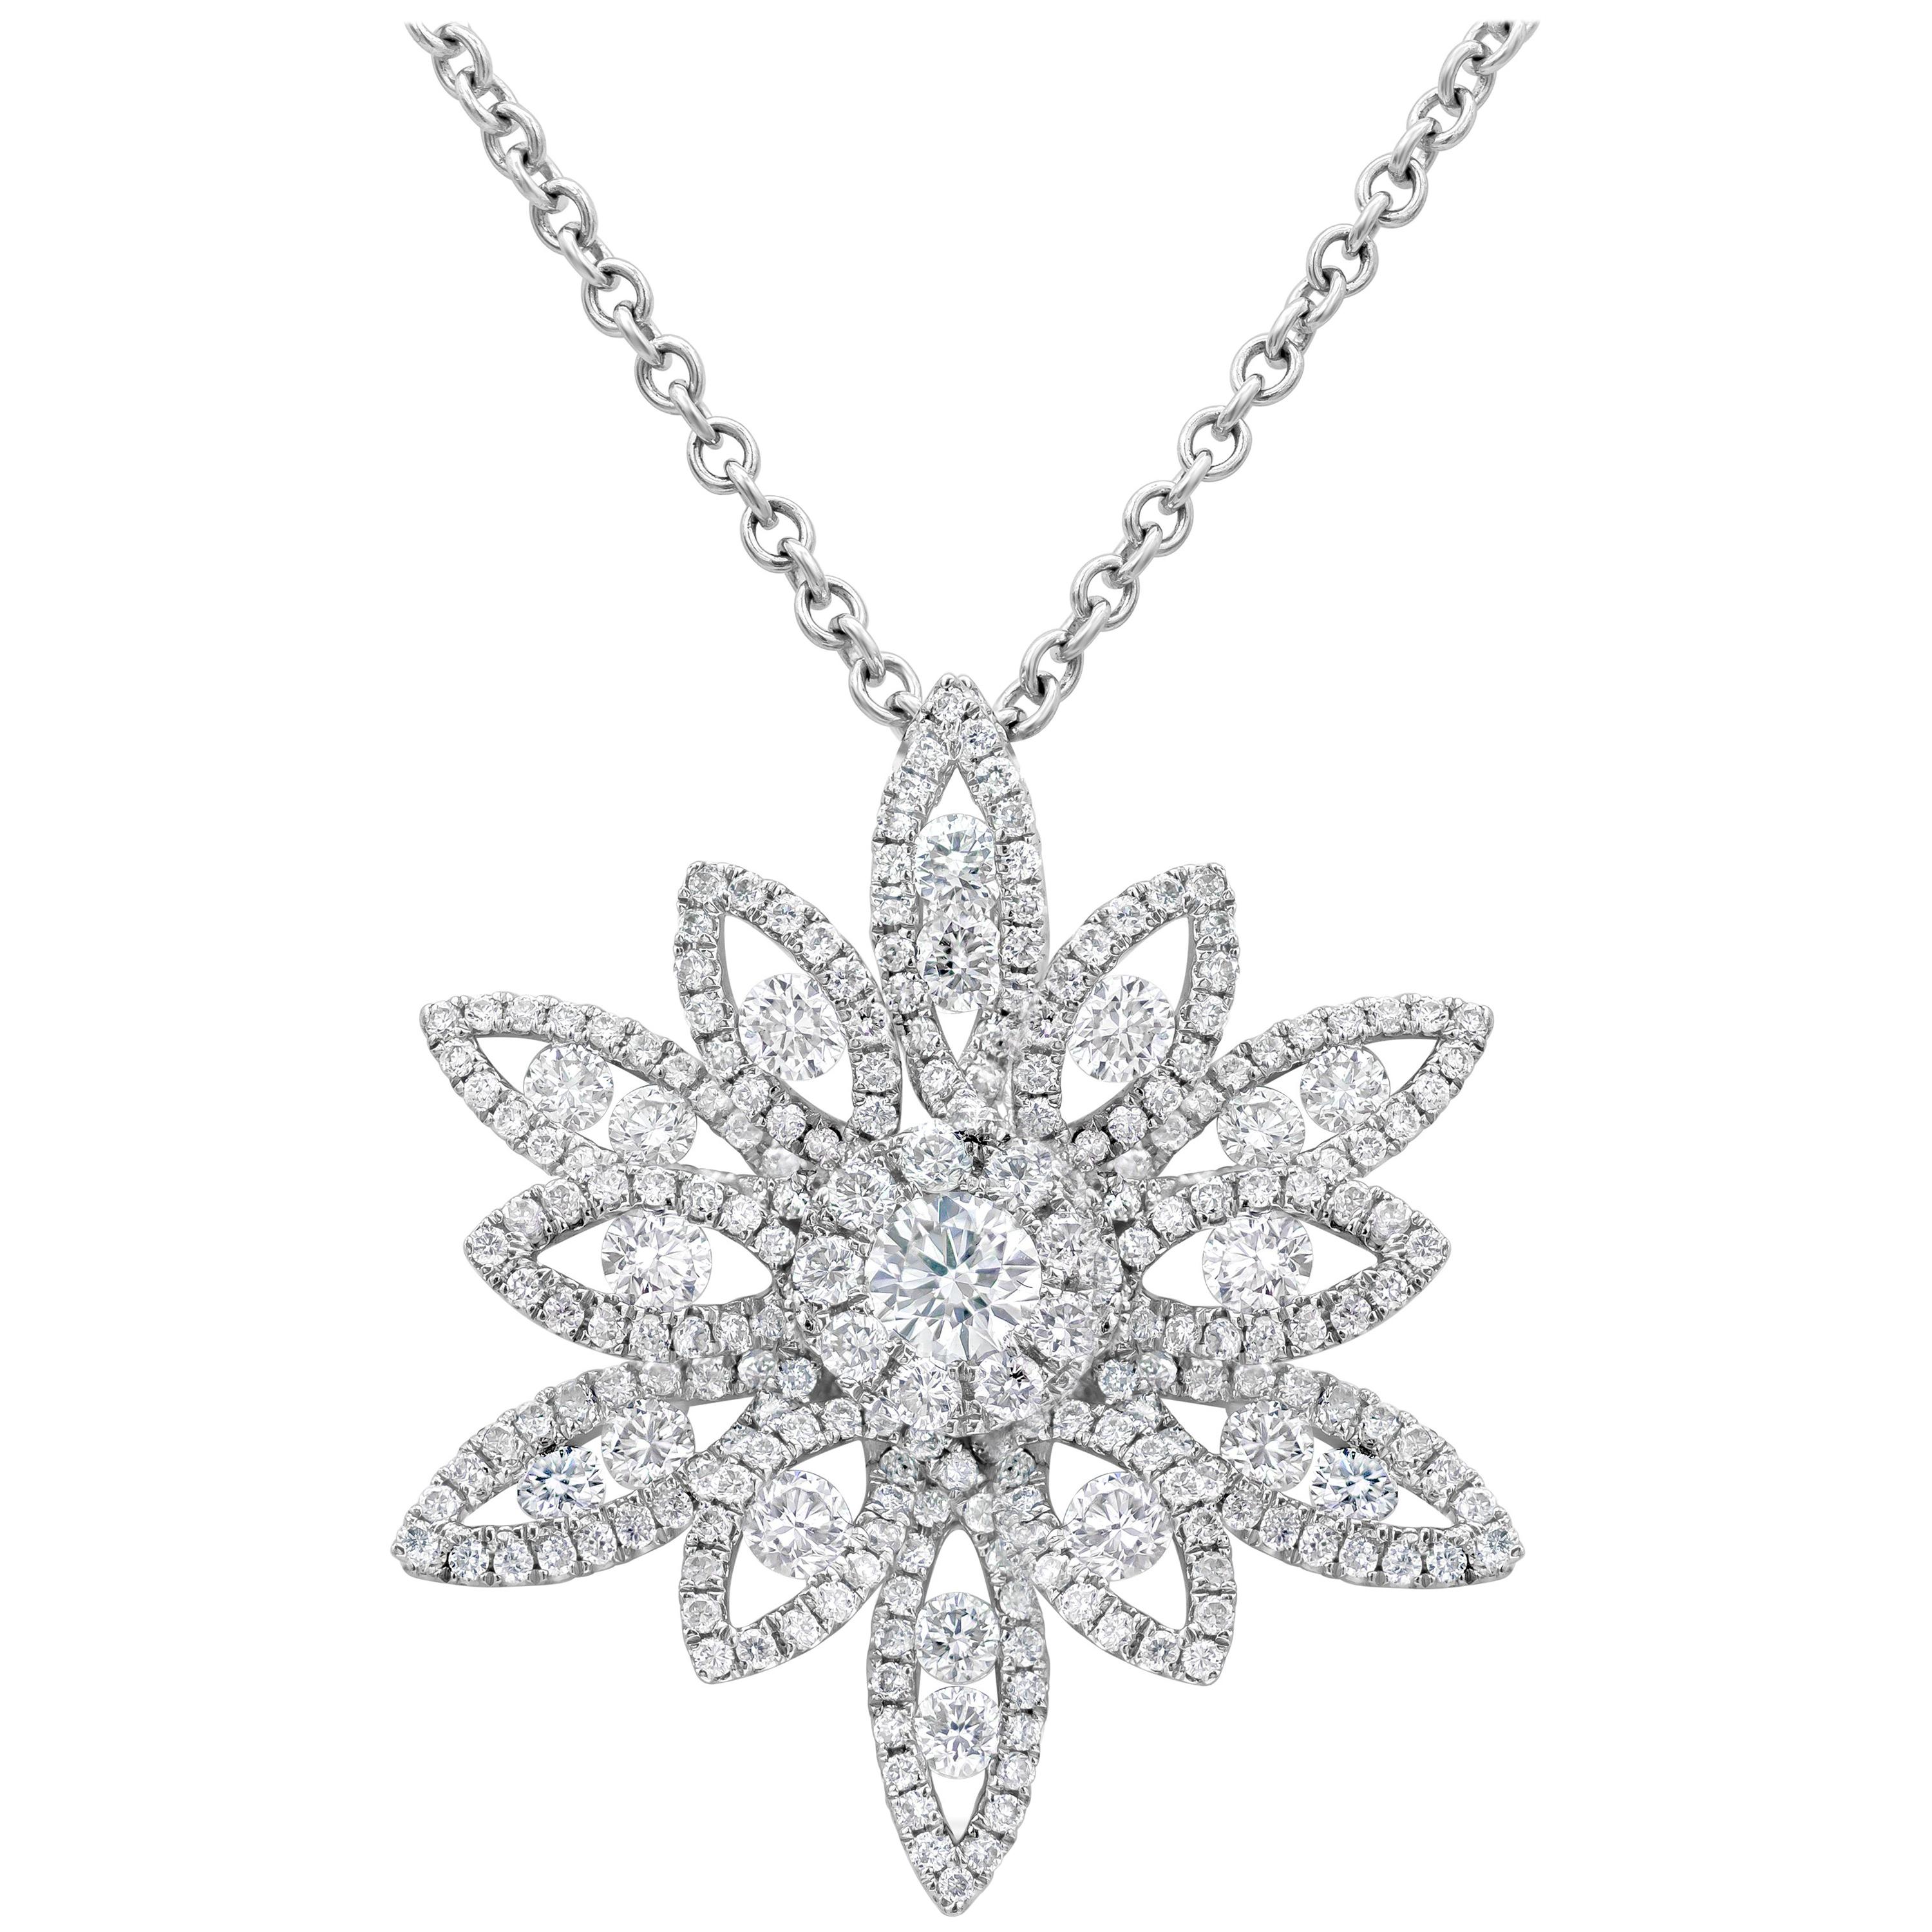 Roman Malakov 1.58 Carats Total Round Diamond Cluster Flower Pendant Necklace For Sale